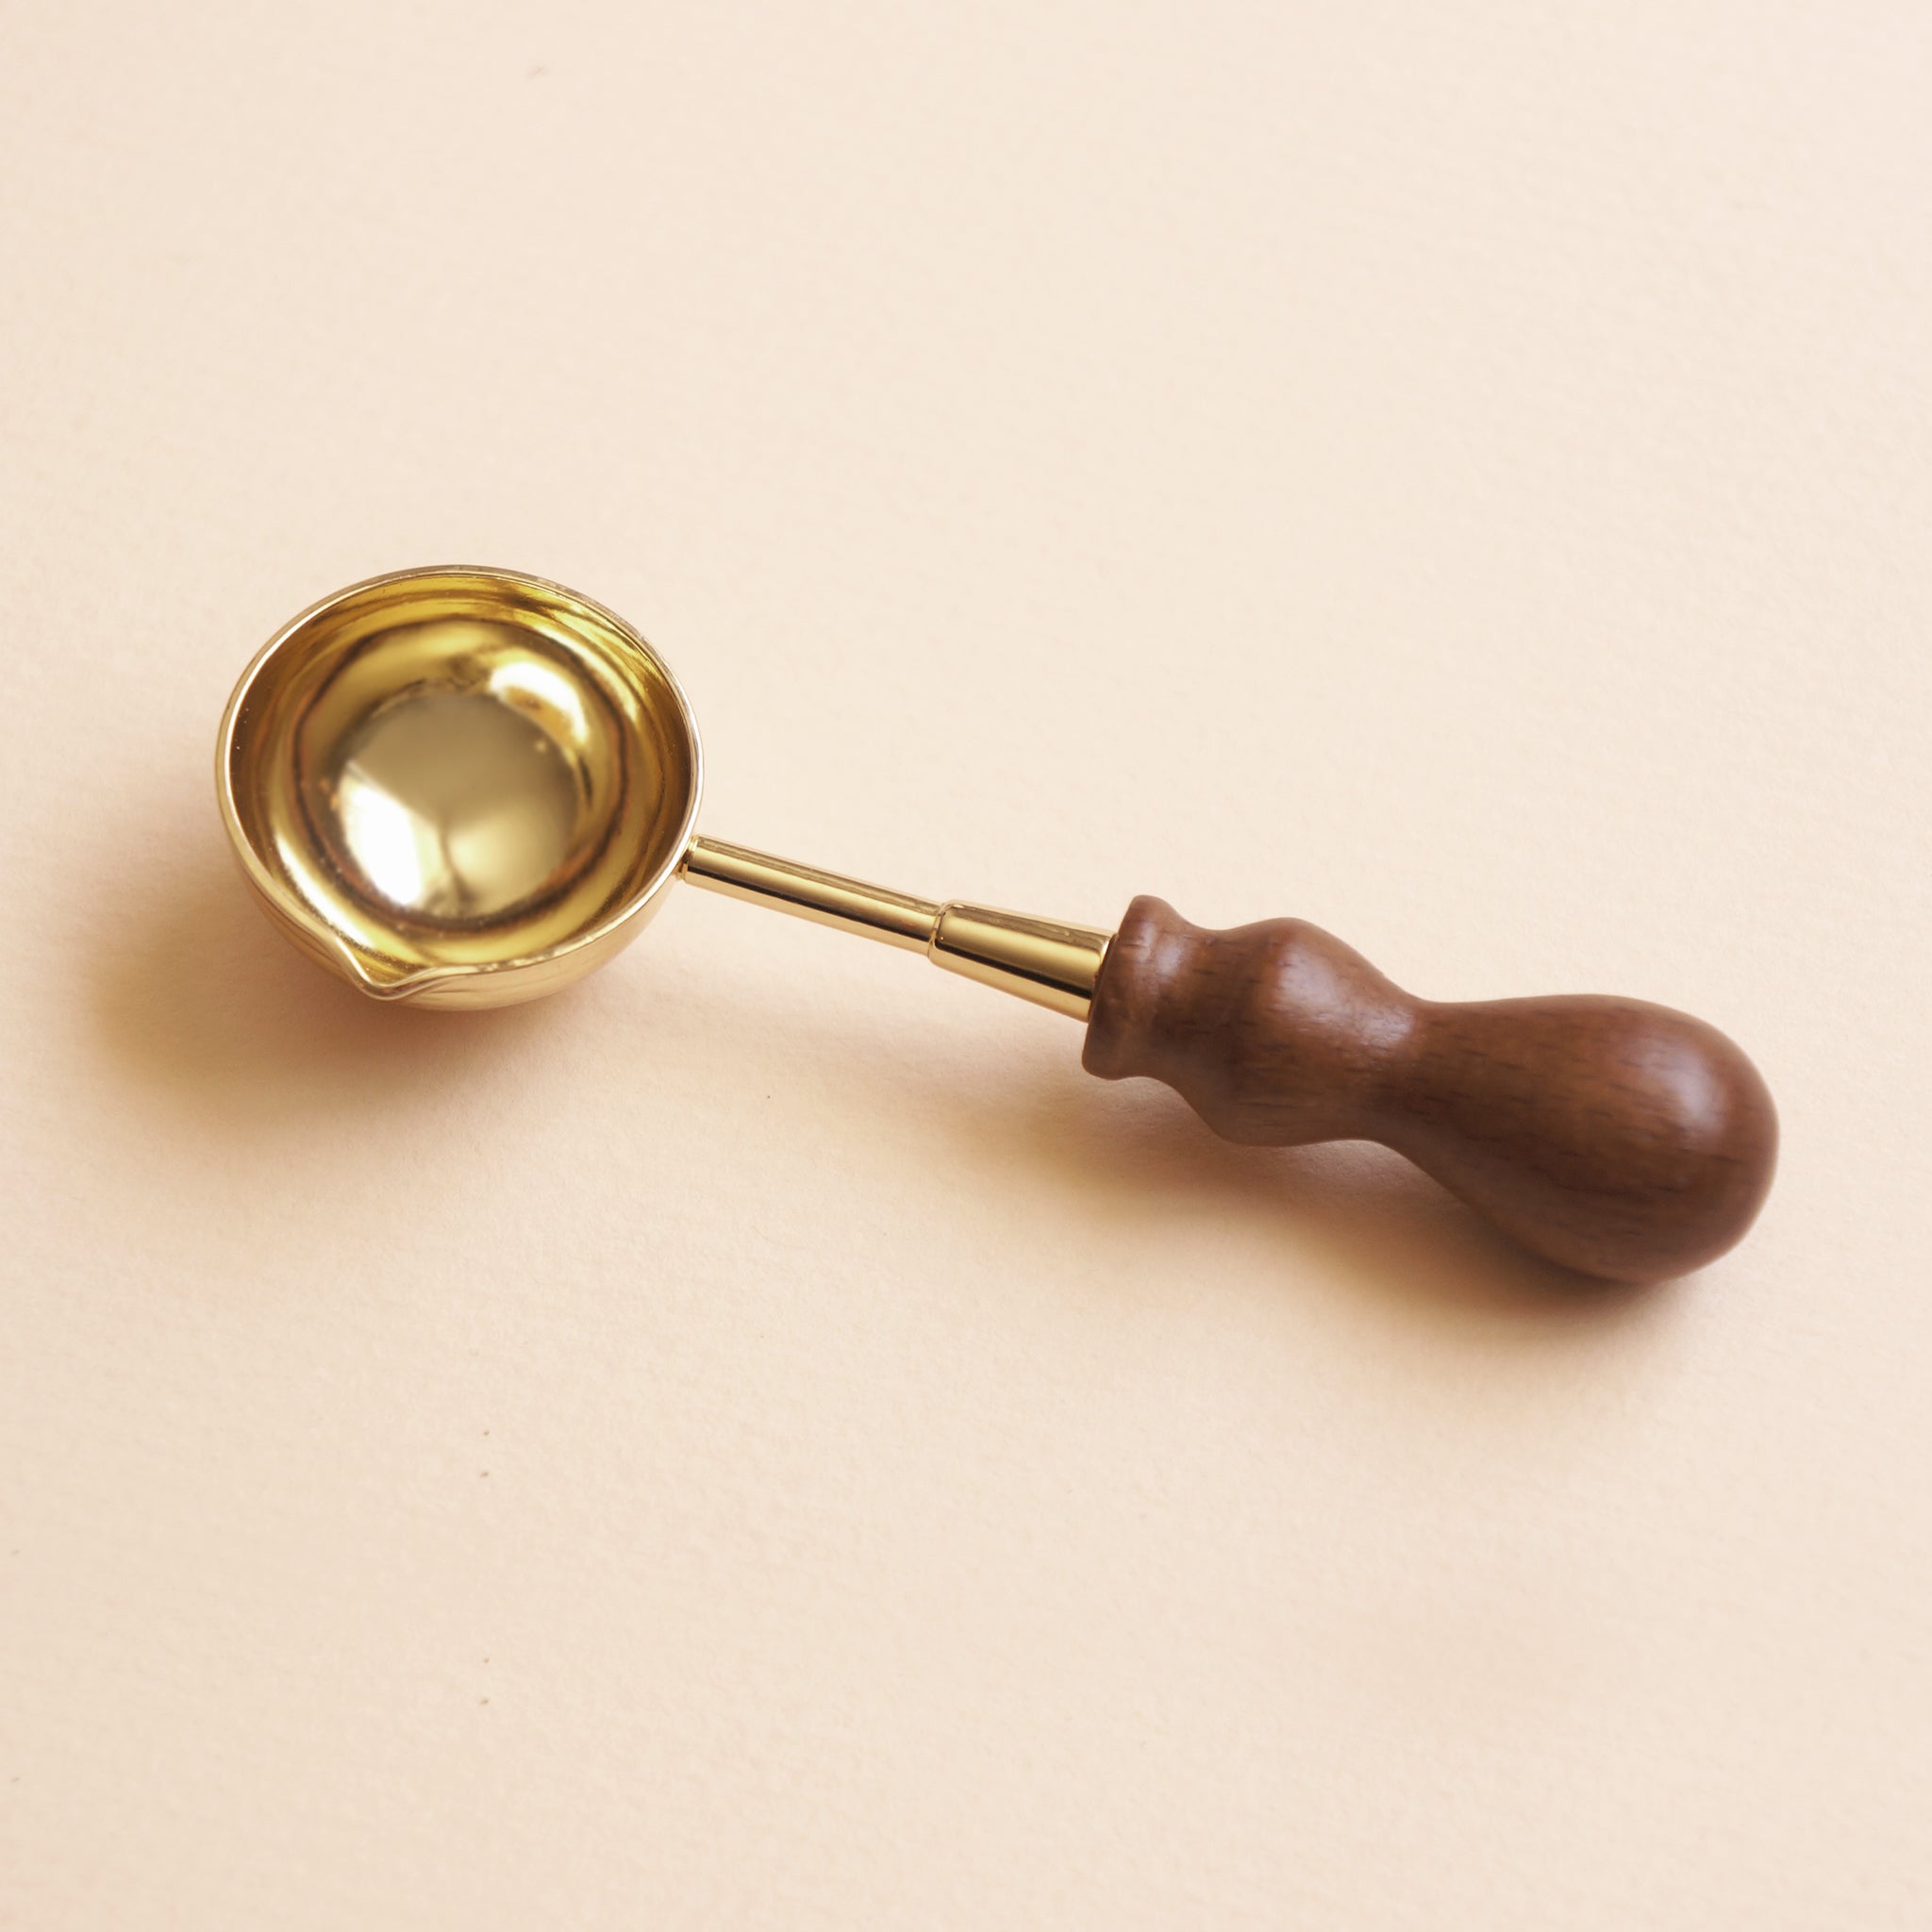 Buy Quality Brass Sealing Wax Spoon - misterrobinson